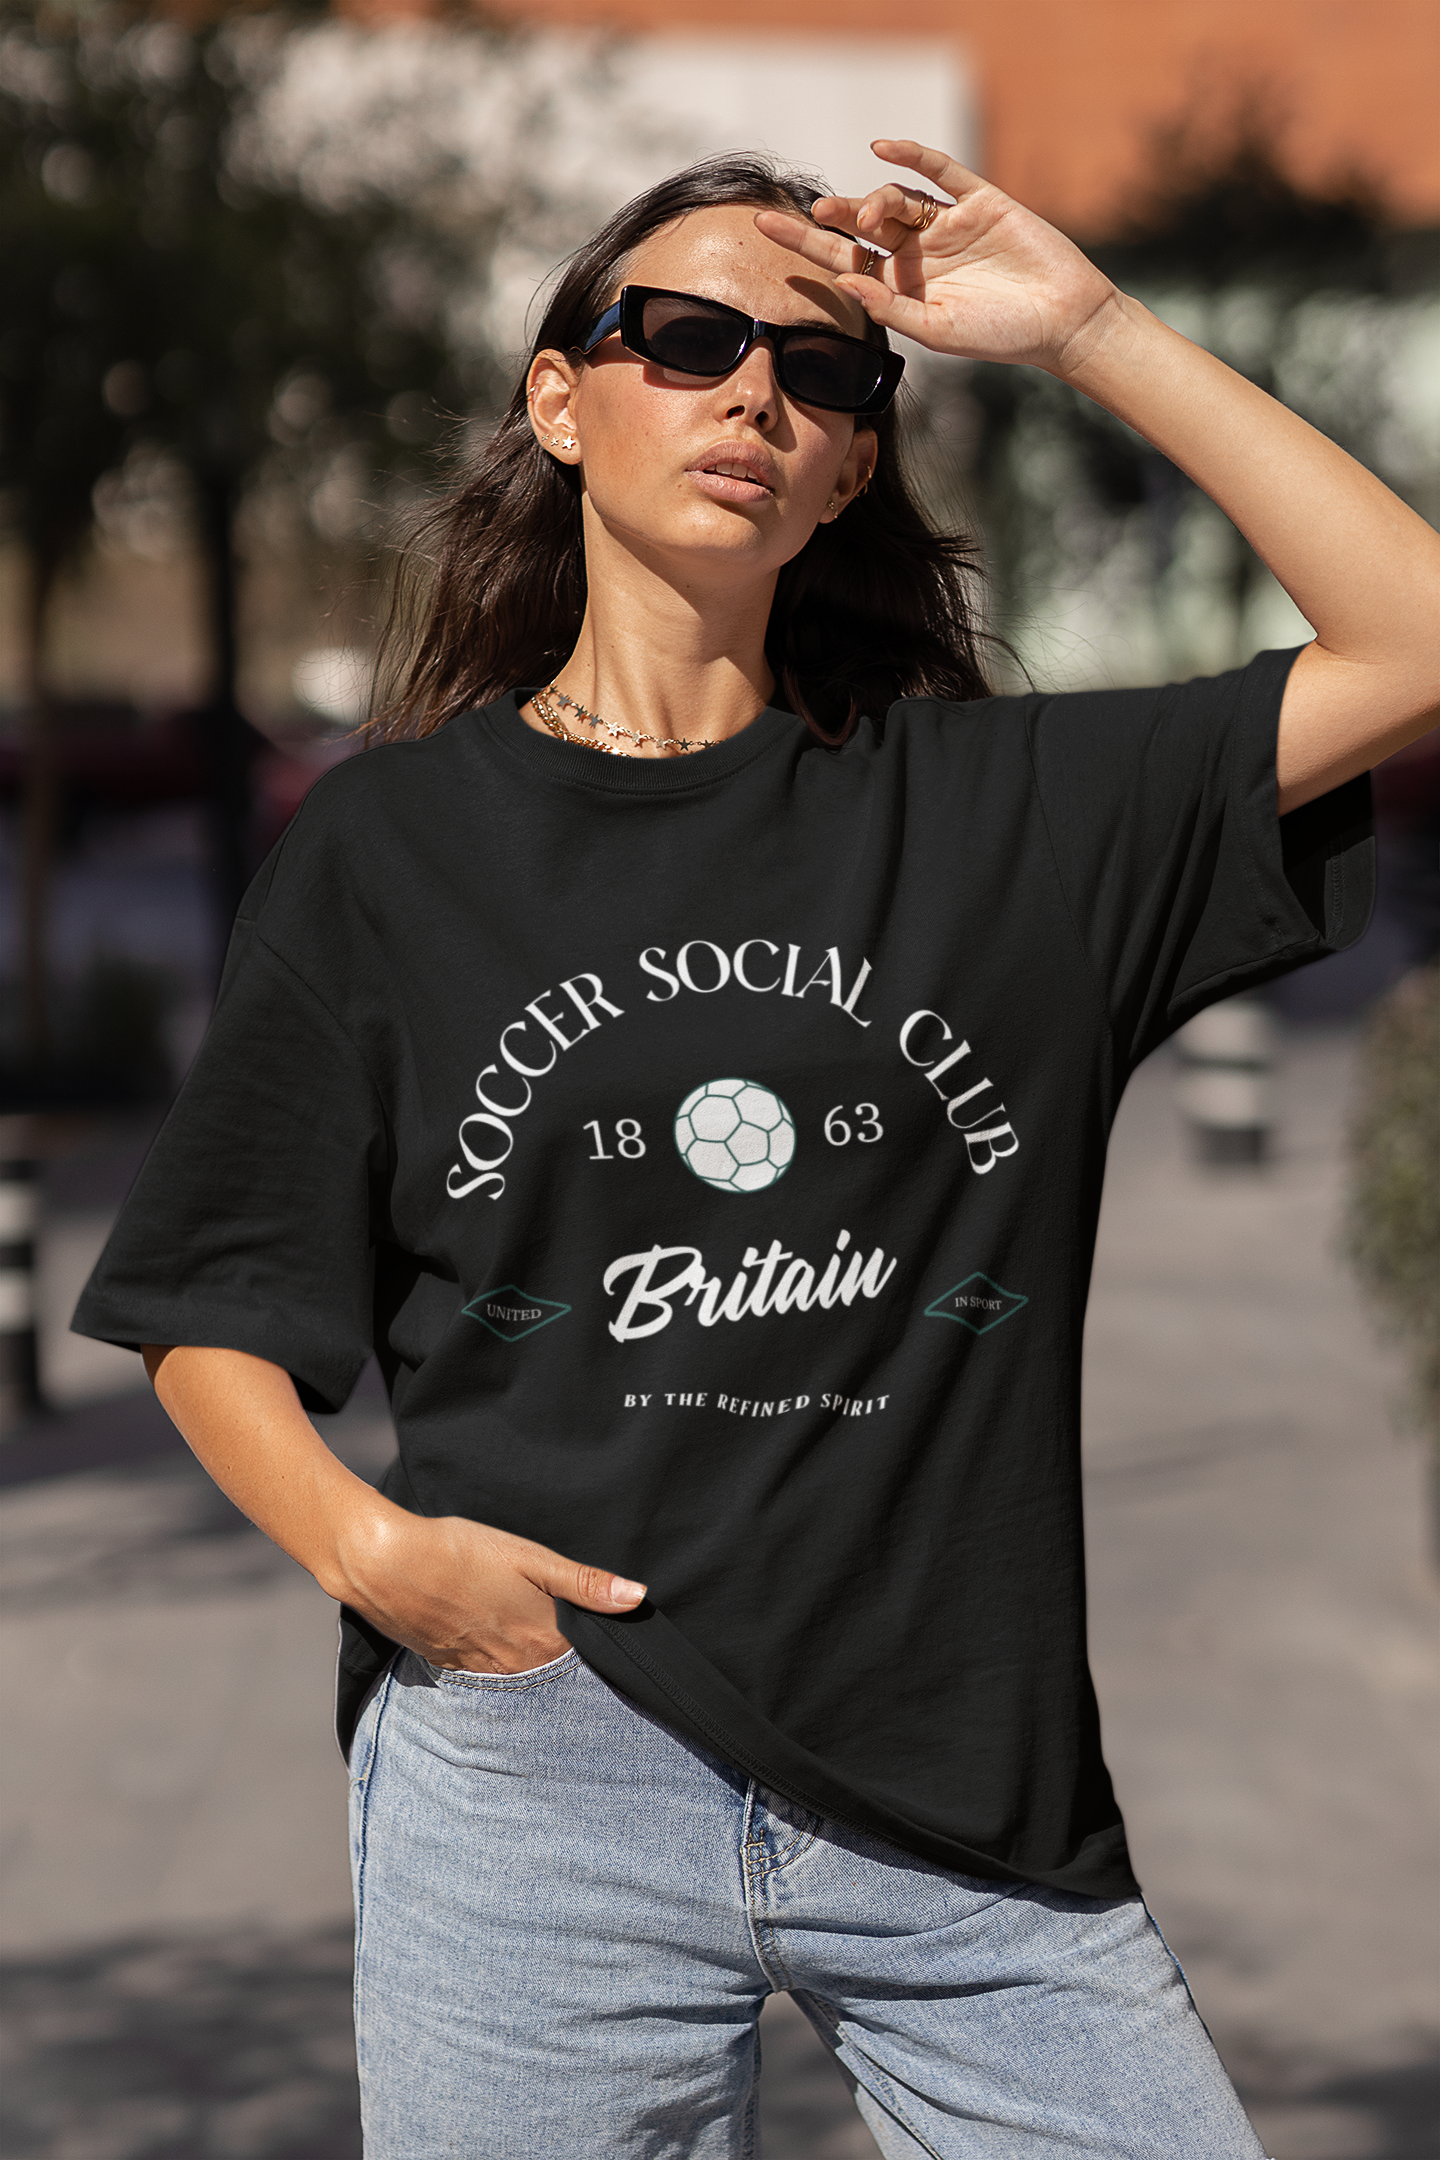 Soccer Social Club - Organic T-shirt